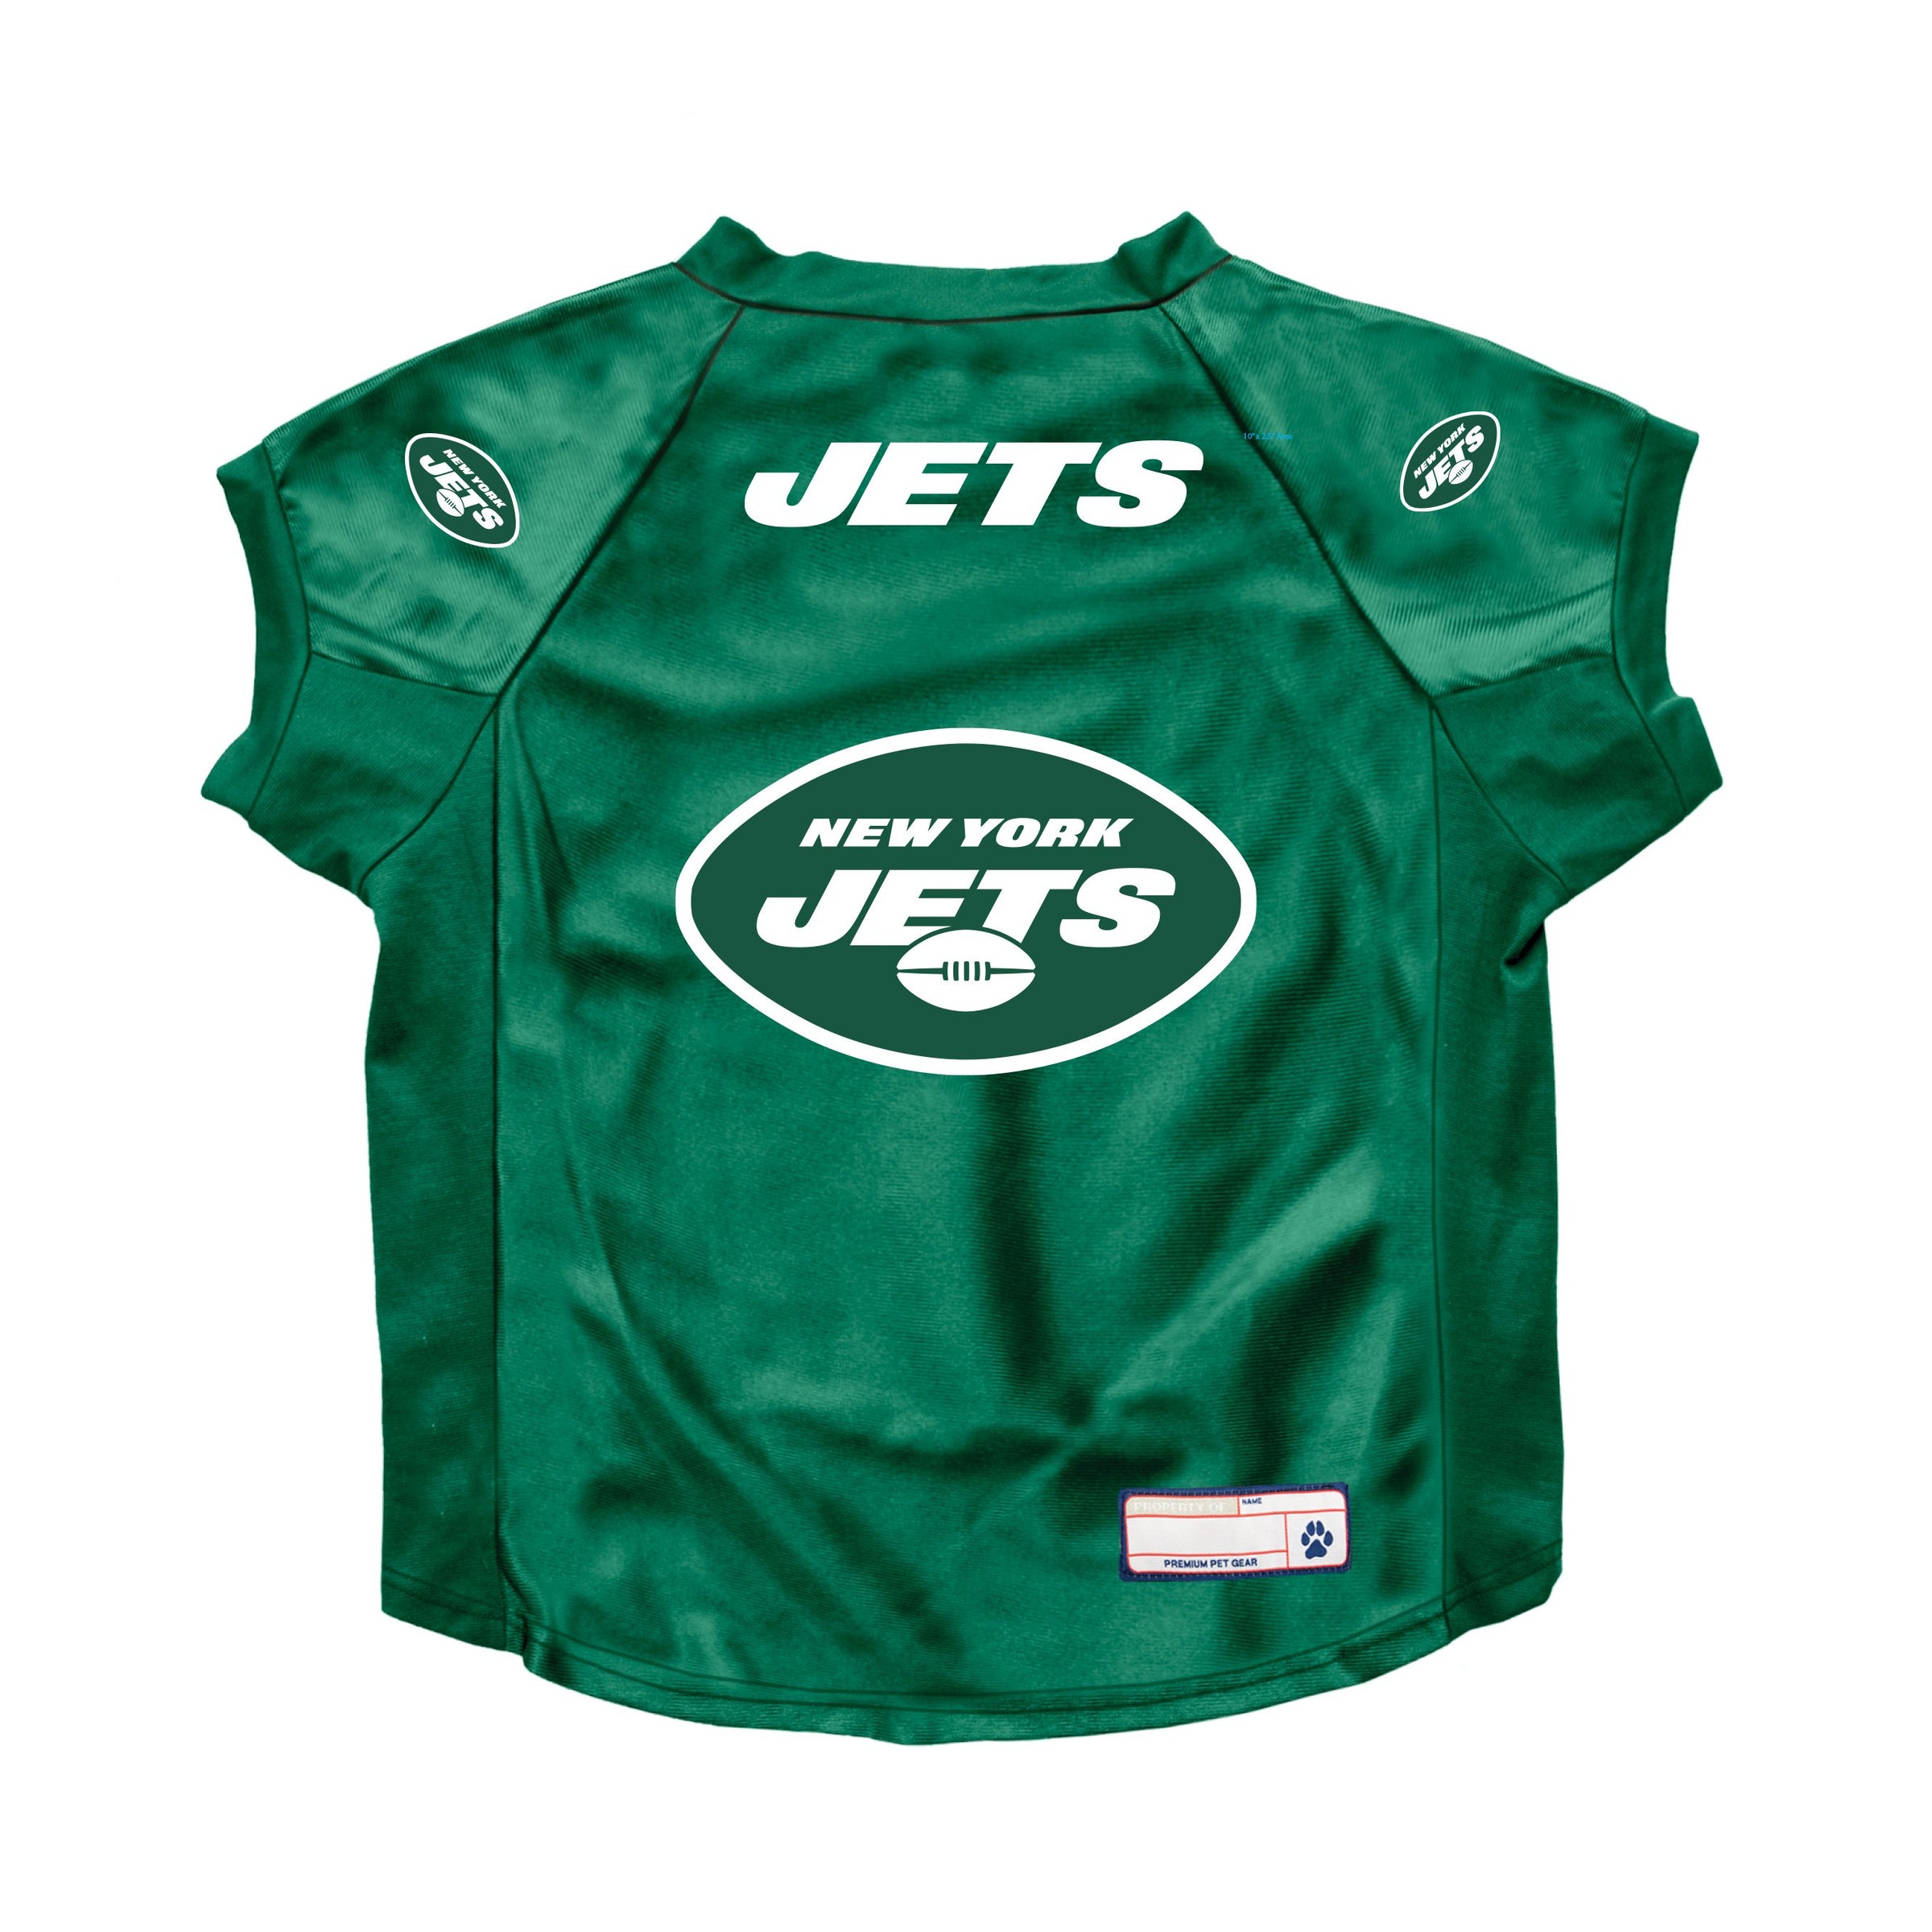 Jets Islanders Knicks and Mets New York Sports License Plate Art T-Shirt